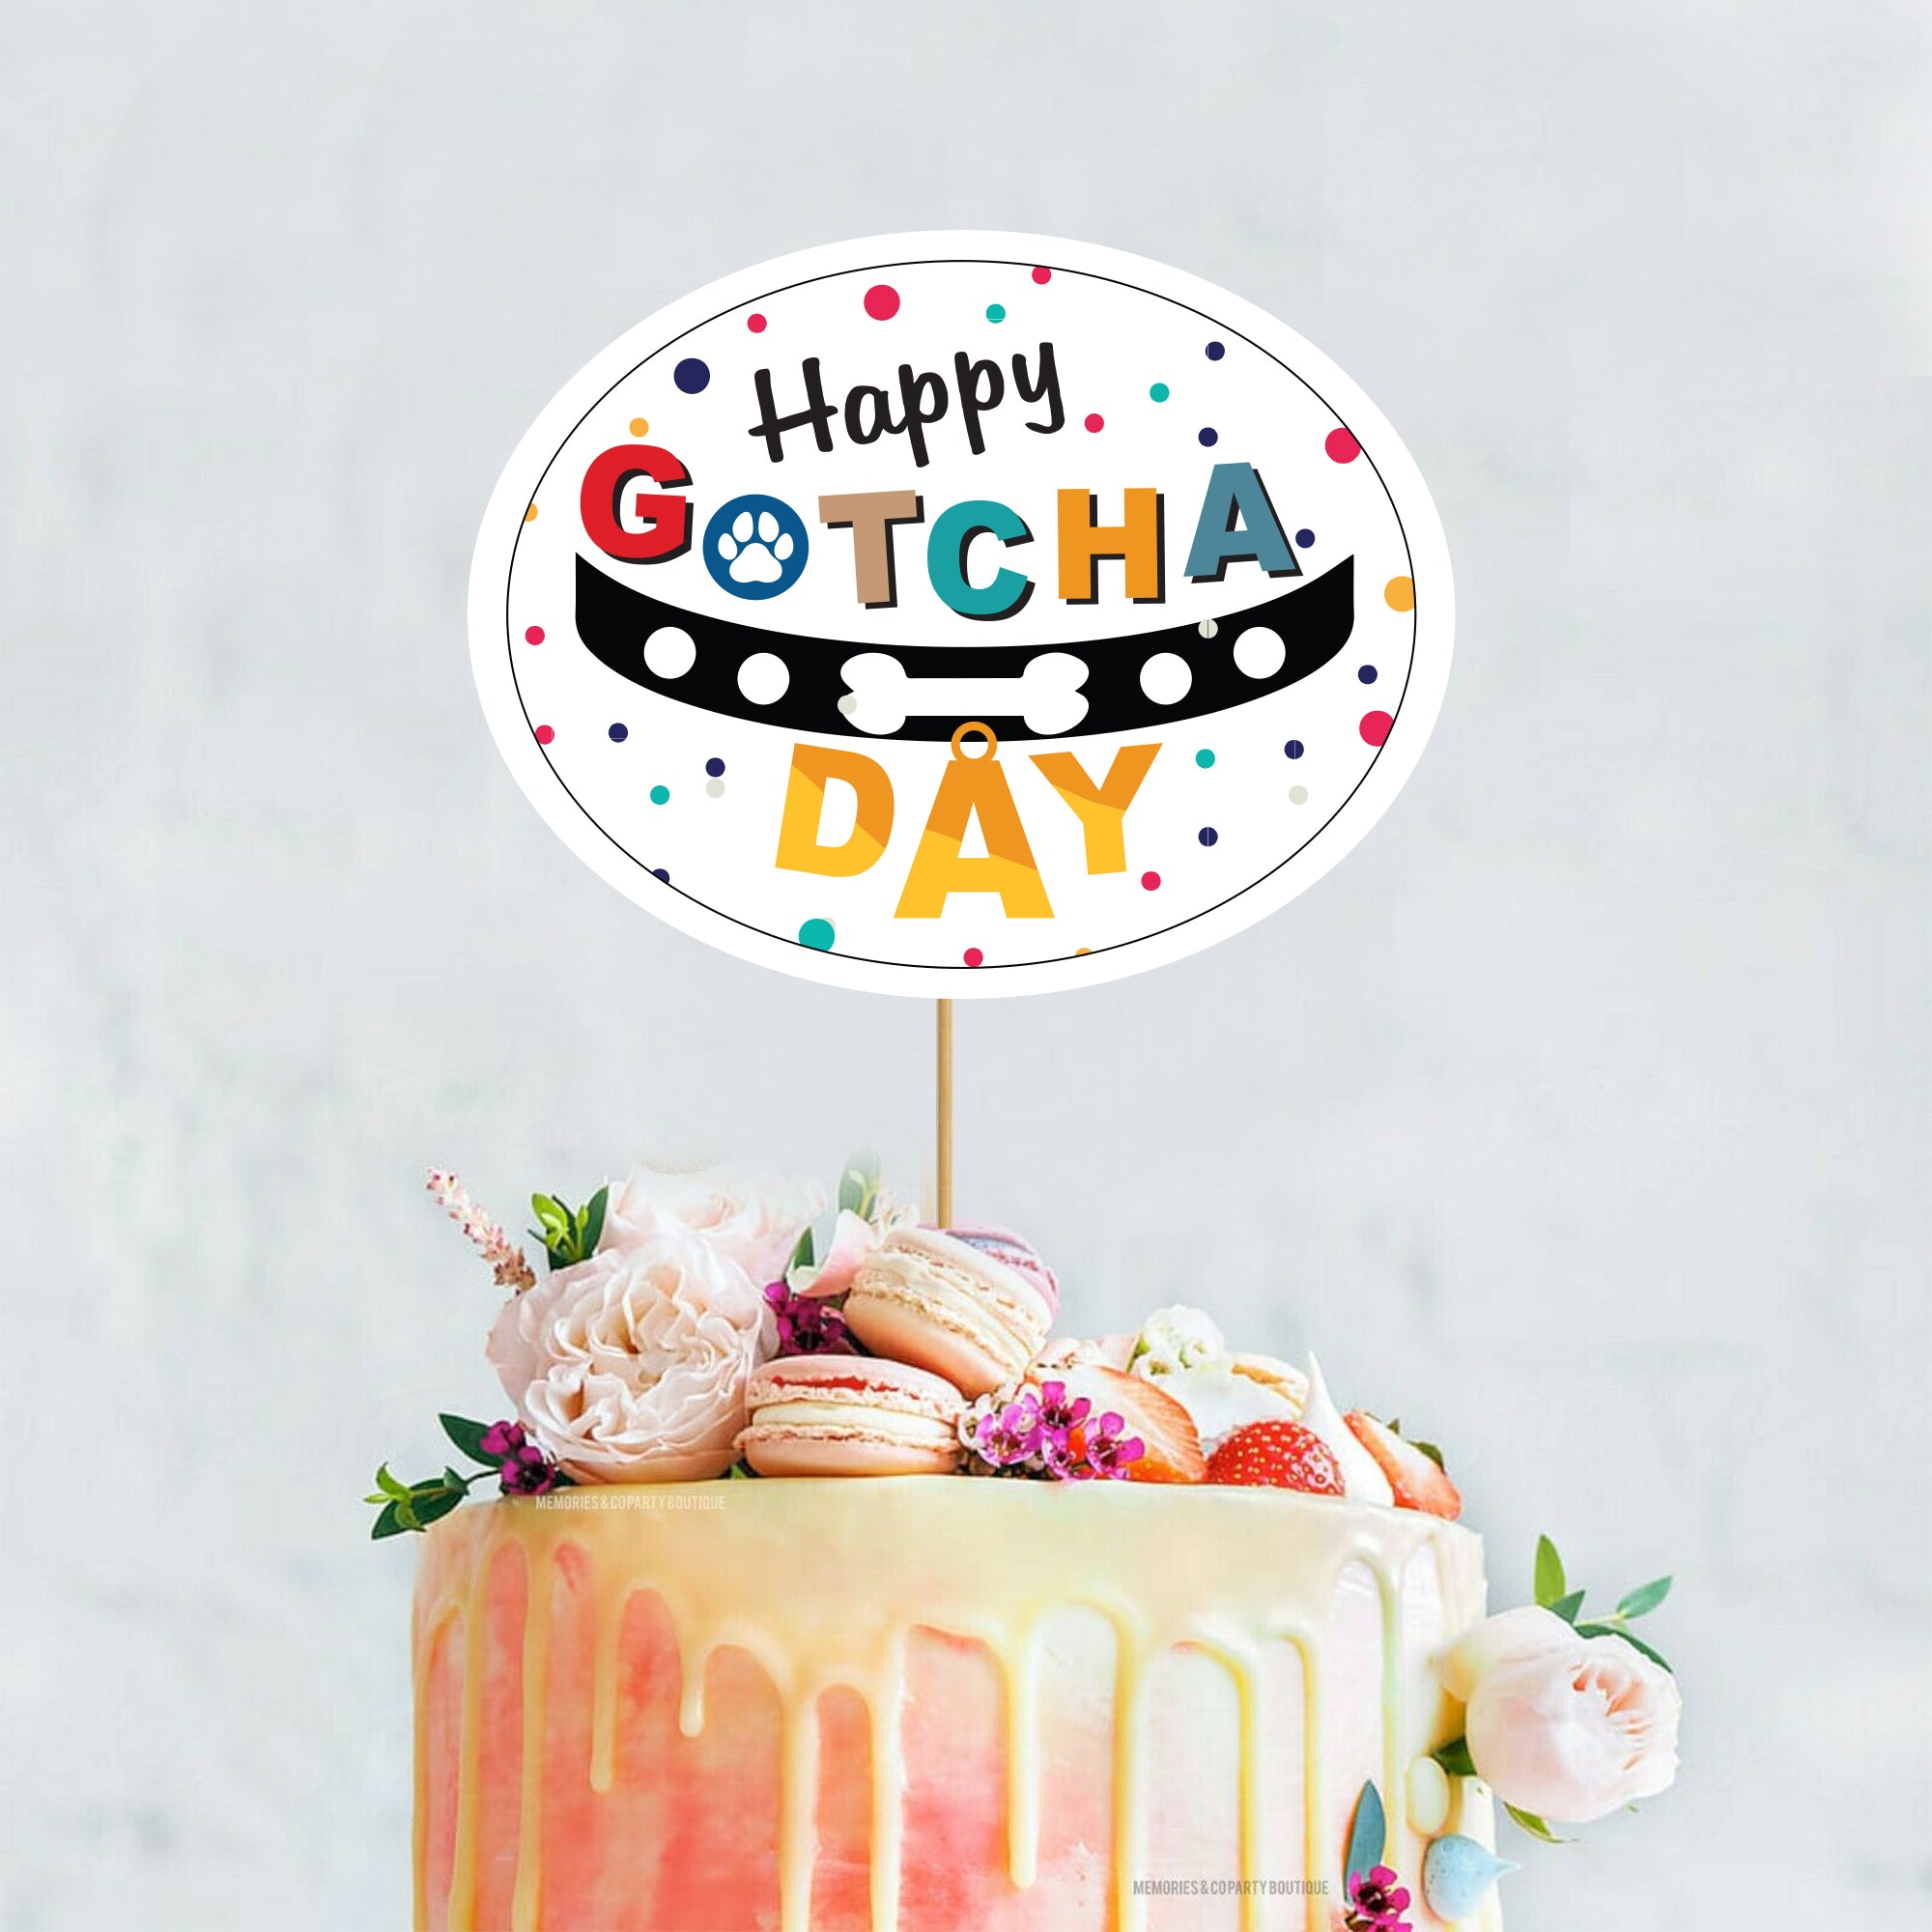 Amazon.com: Happy Birthday Cake Topper, Irish/Lucky Theme Cake Decor,  St.Patrick Day Theme Birthday Party Decorations Supplies, Green Glitter :  Grocery & Gourmet Food